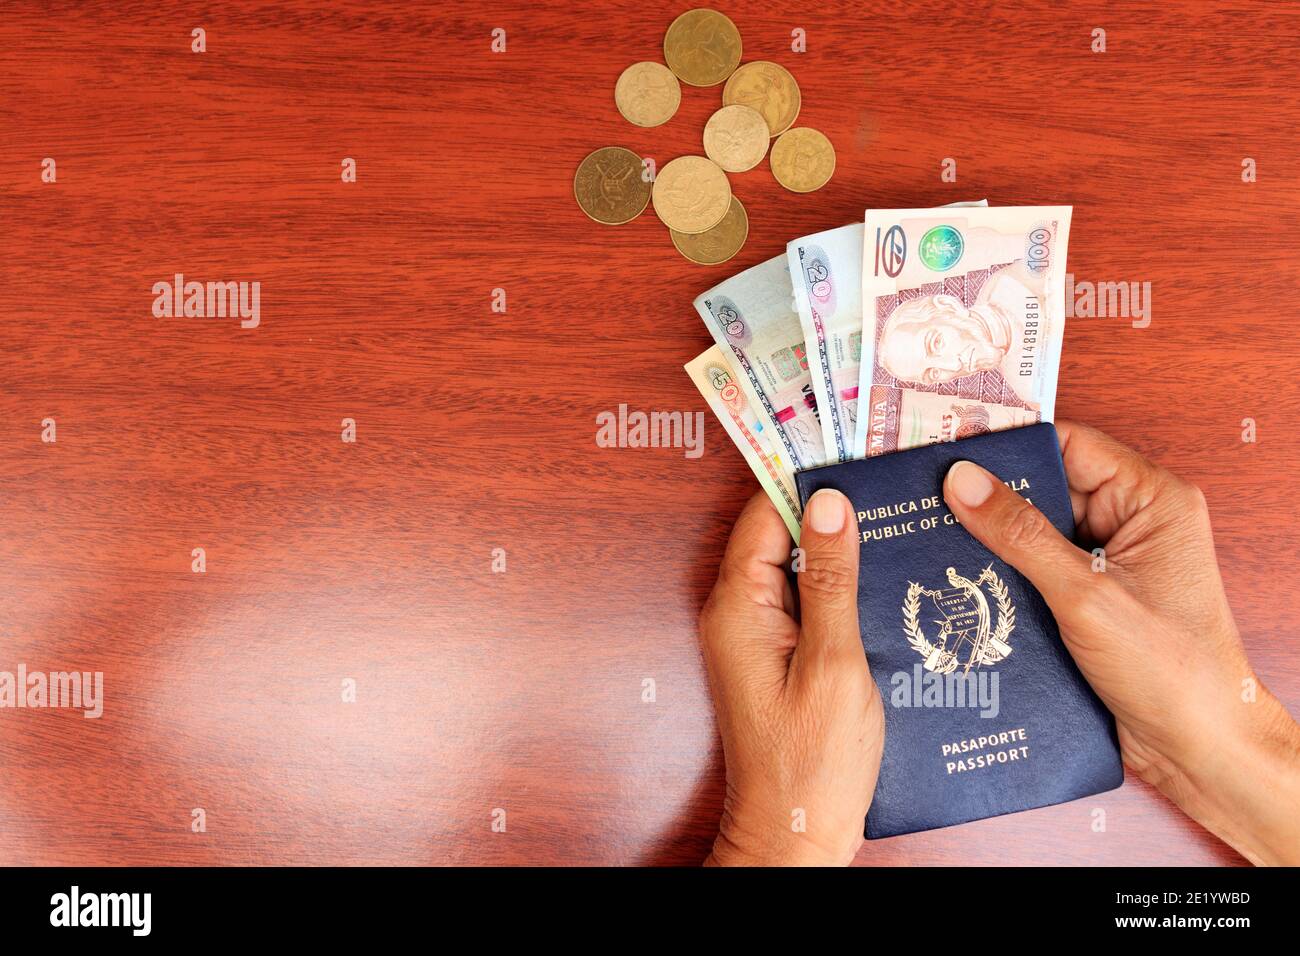 hands holding passport and money Stock Photo